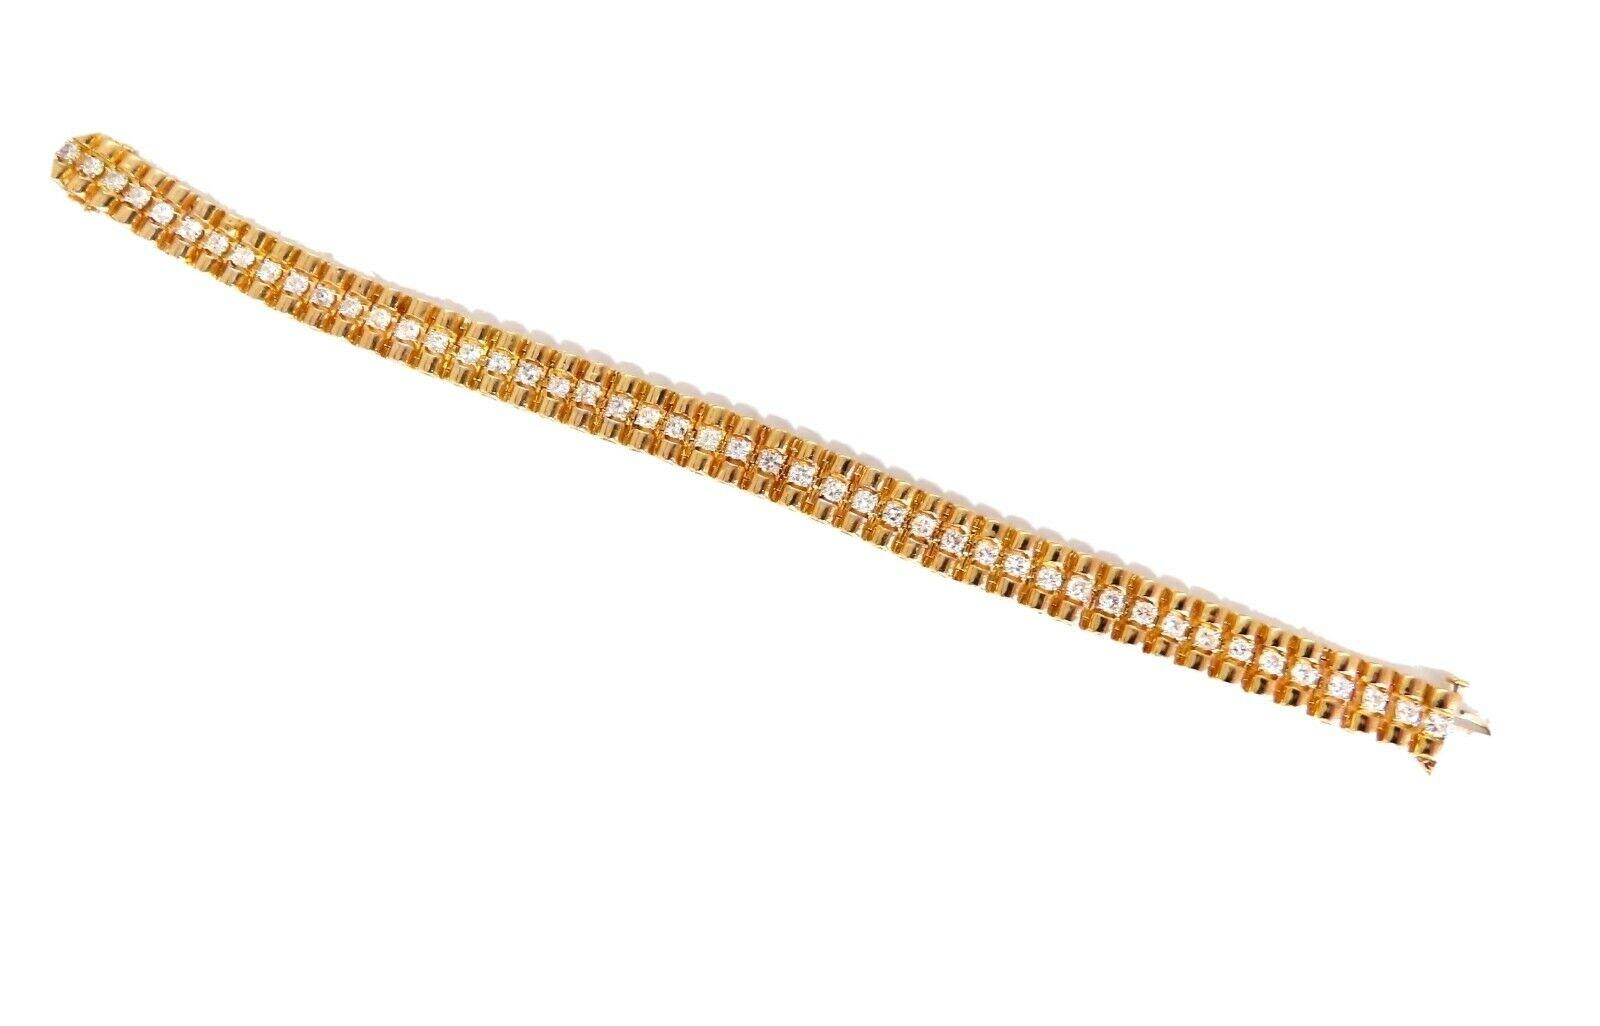 3D wide tubular link bracelet

3.30 carat natural round diamonds link bracelet.

G color vs2 clarity.

14 karat yellow gold 38 grams

Bracelet measures 8-in long

9.4mm wide 4.1 mm depth

$18,000 appraisal certificate to a company